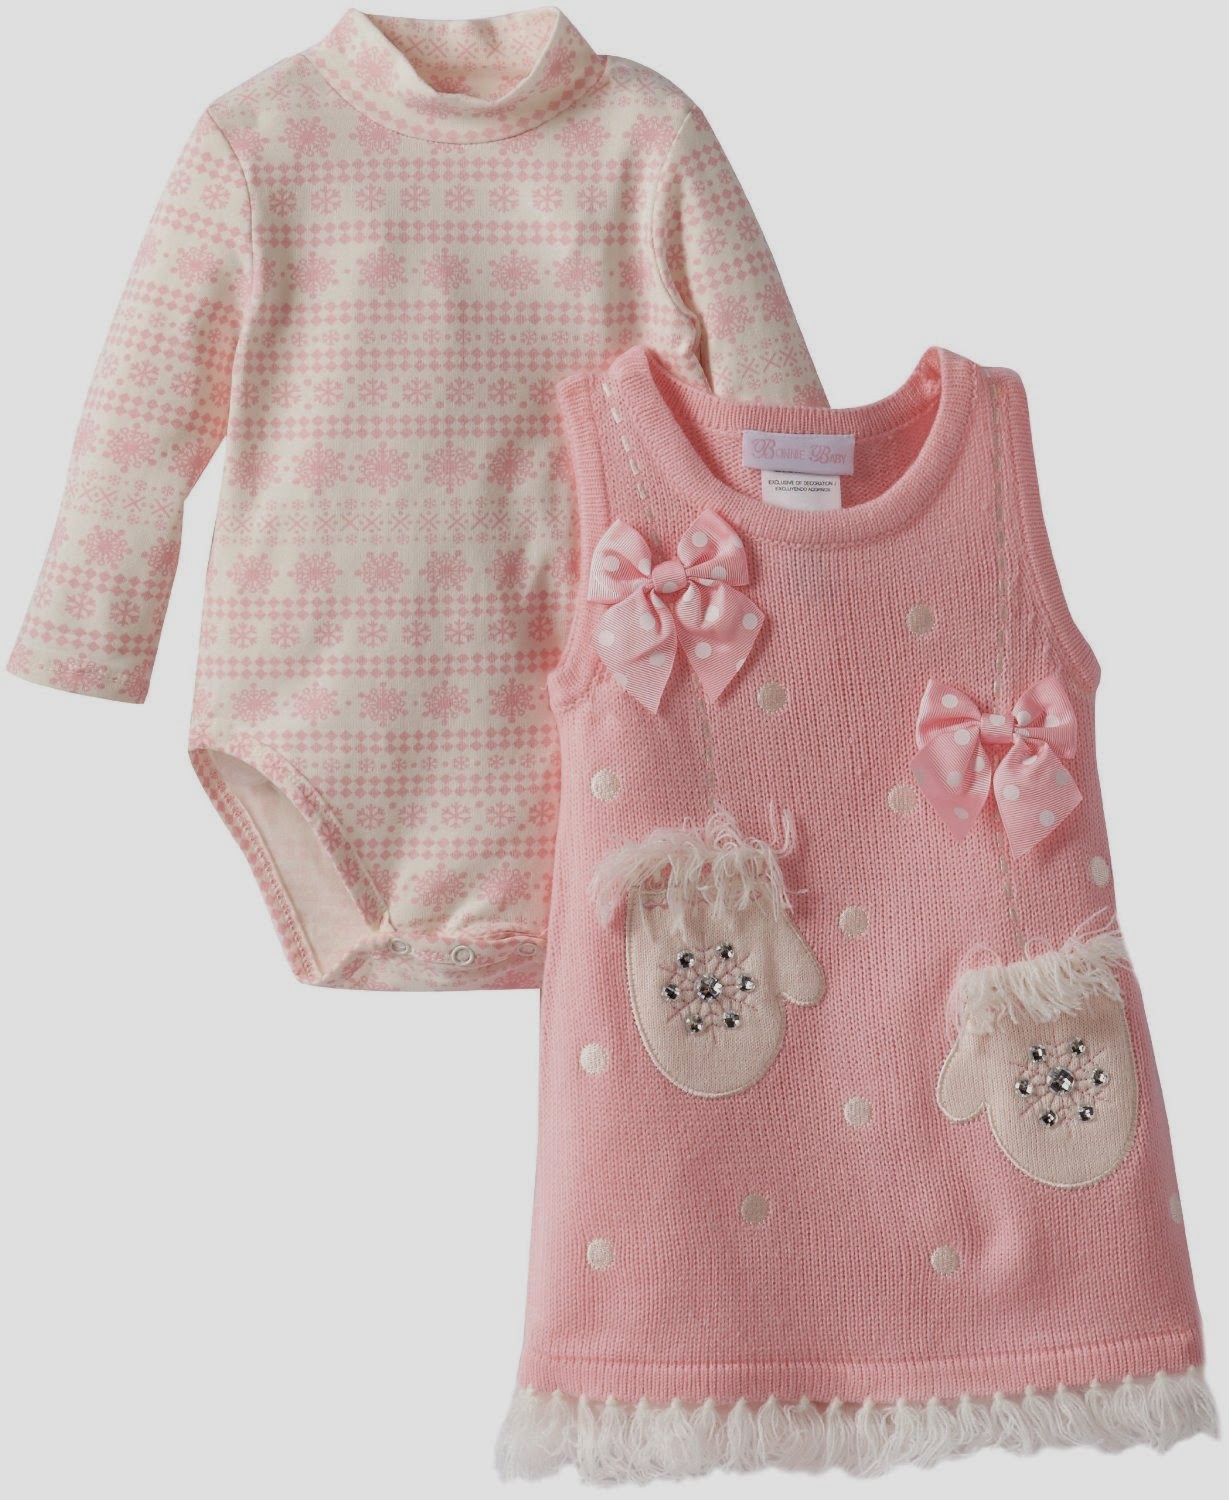 Rays Little: Pakaian Bayi Perempuan Merek Bonnie Baby 